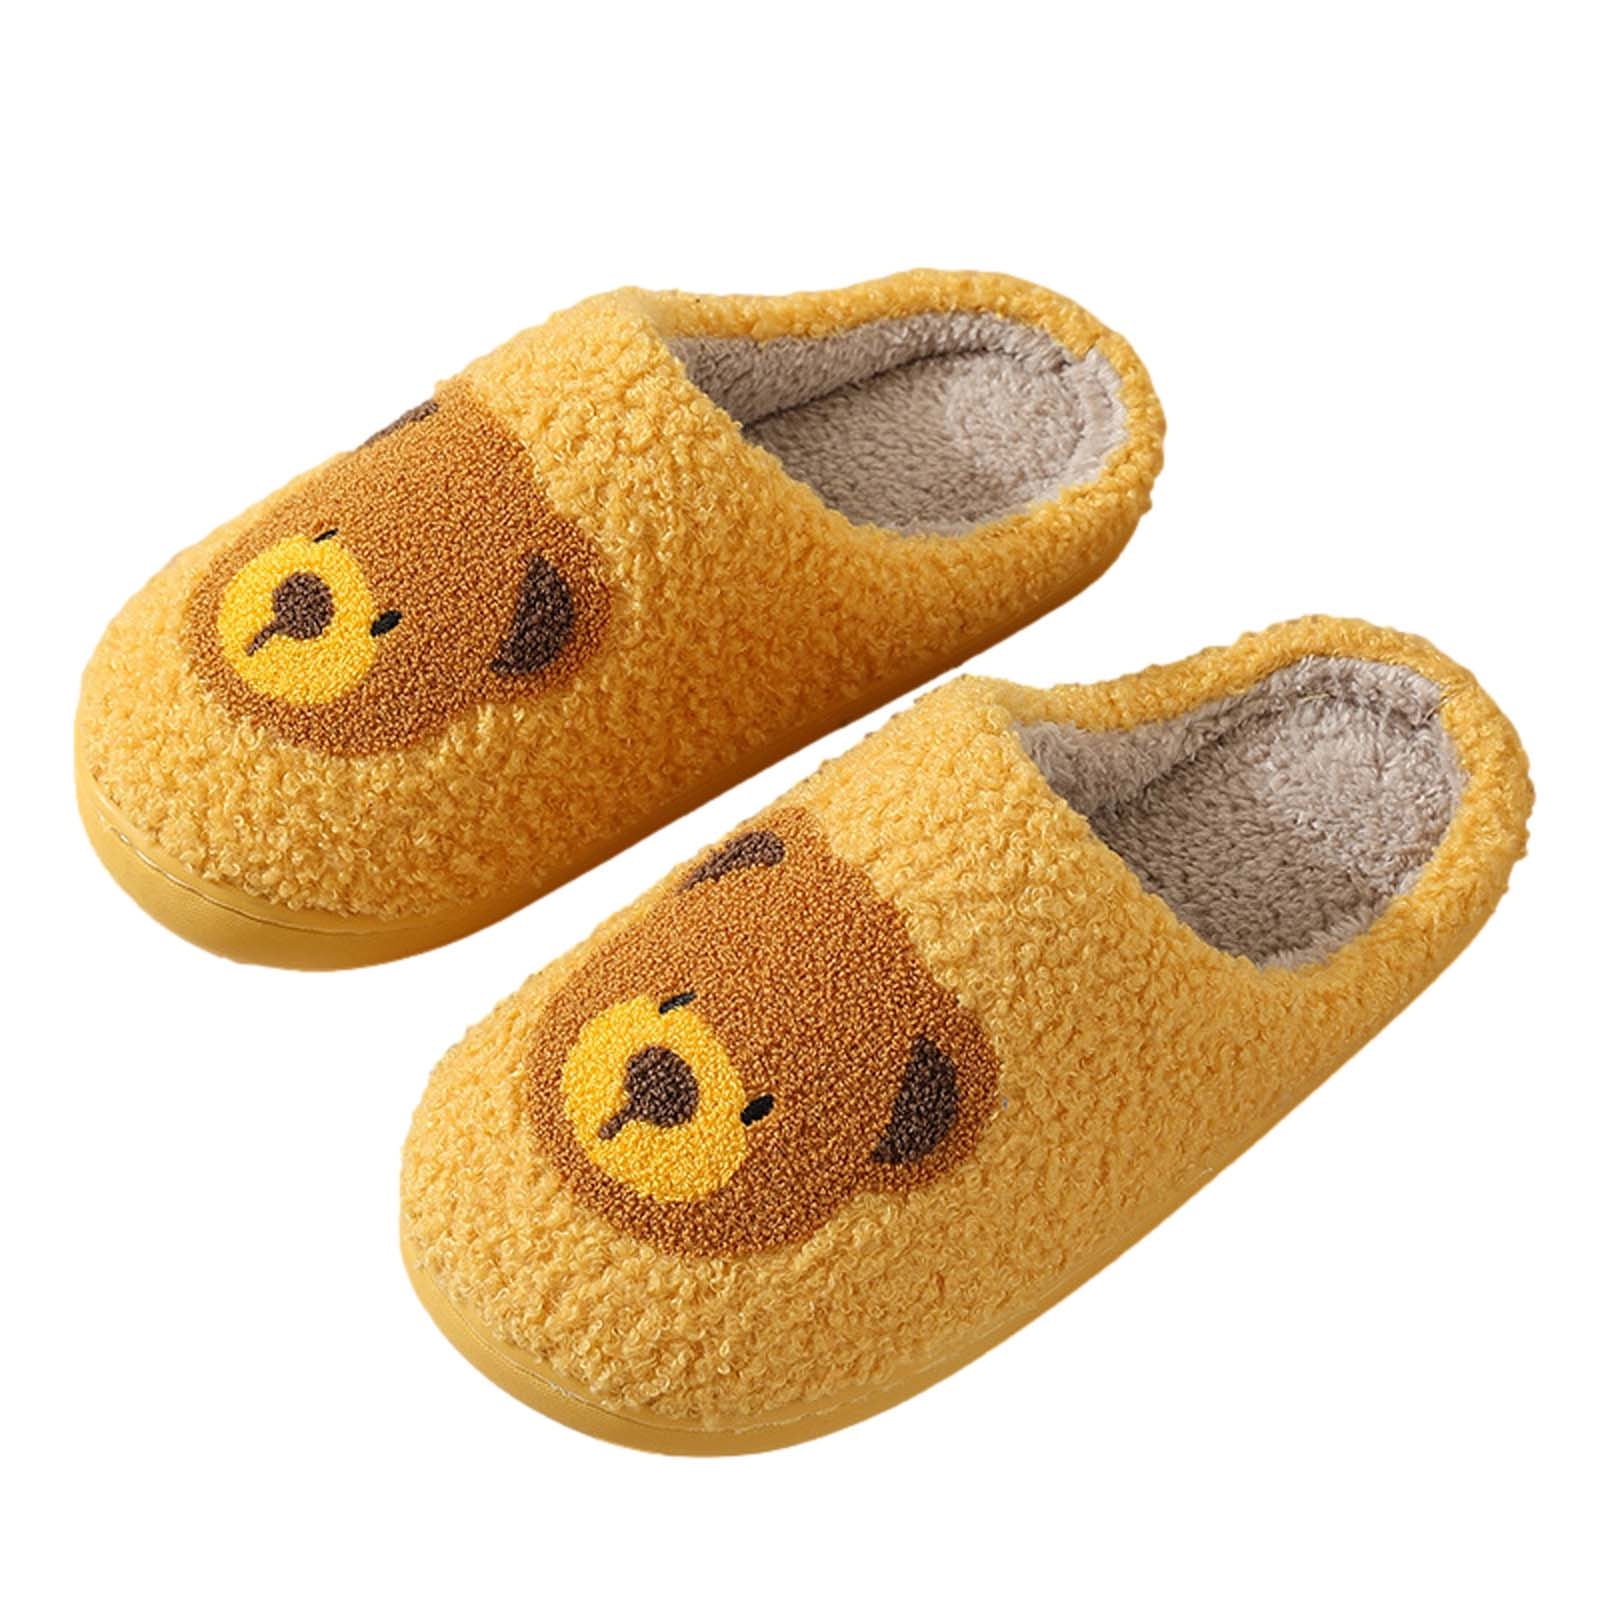 Sandylion Fuzzy Stickers SLEEPYTIME Bedtime Slippers Teddy Bear